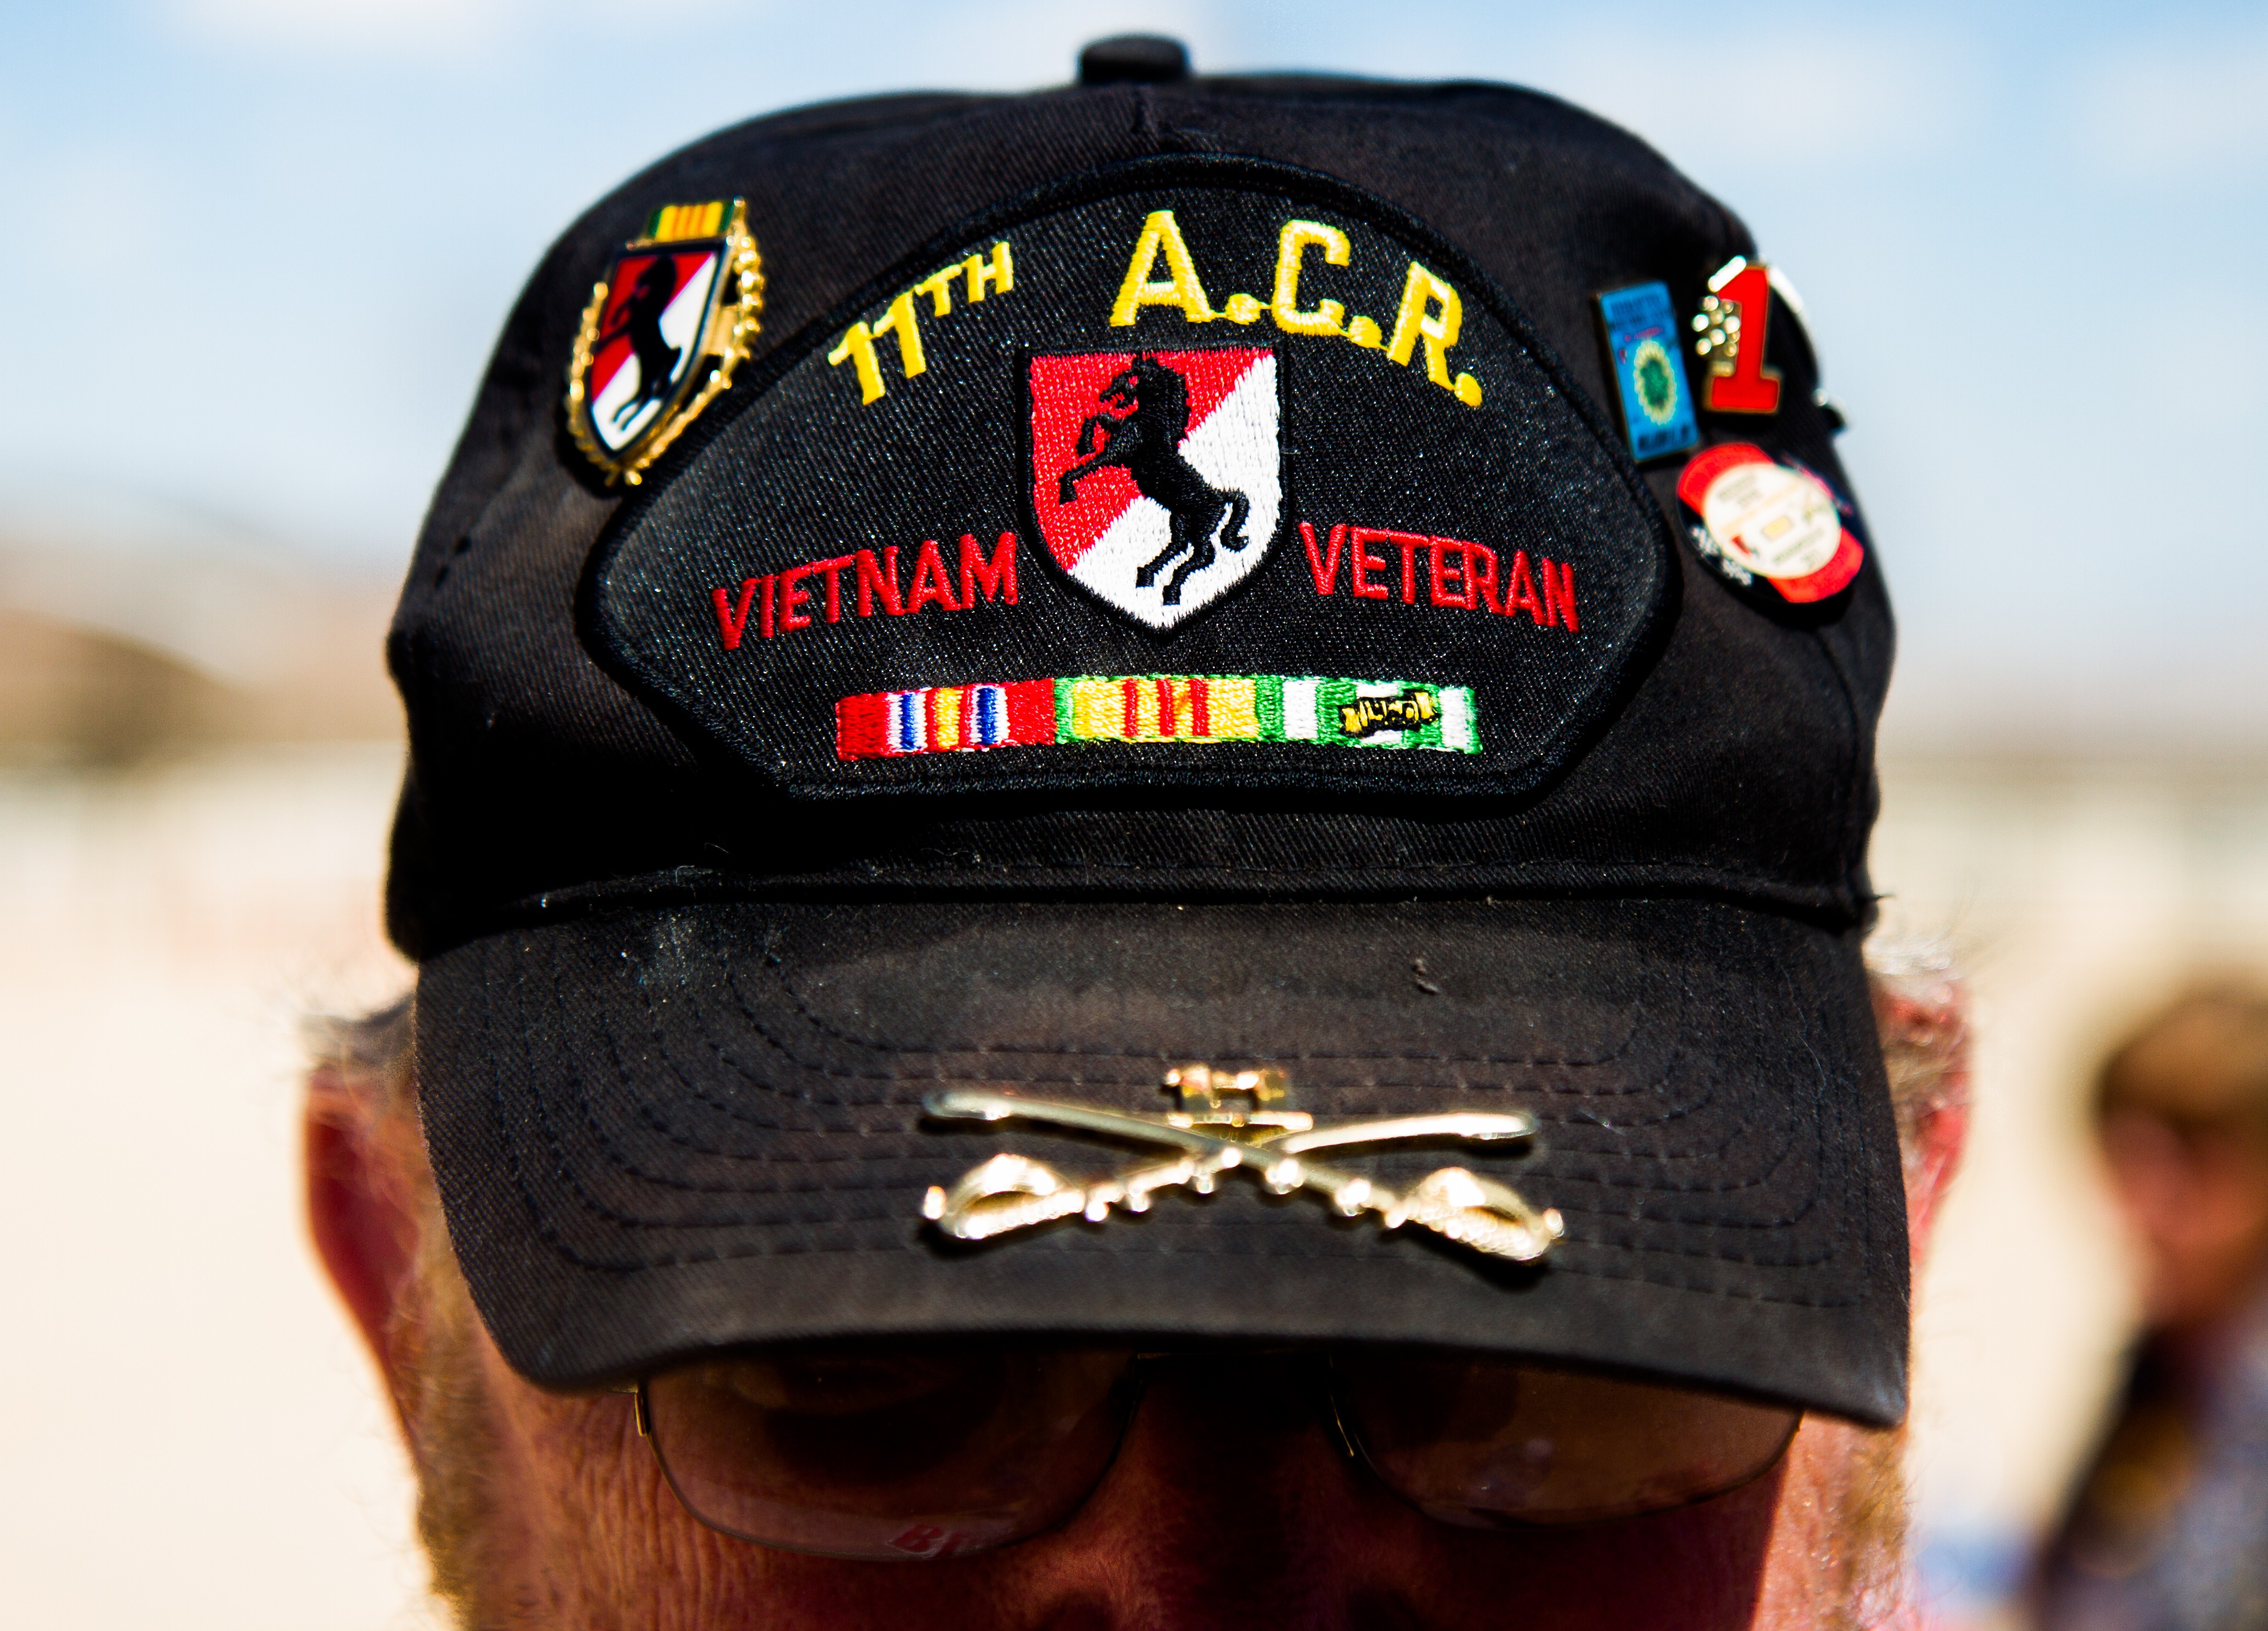 ARMY 11TH ACR ARMORED CAVALRY REGIMENT BLACKHORSE VIETNAM VETERAN HAT W/ RIBBONS 